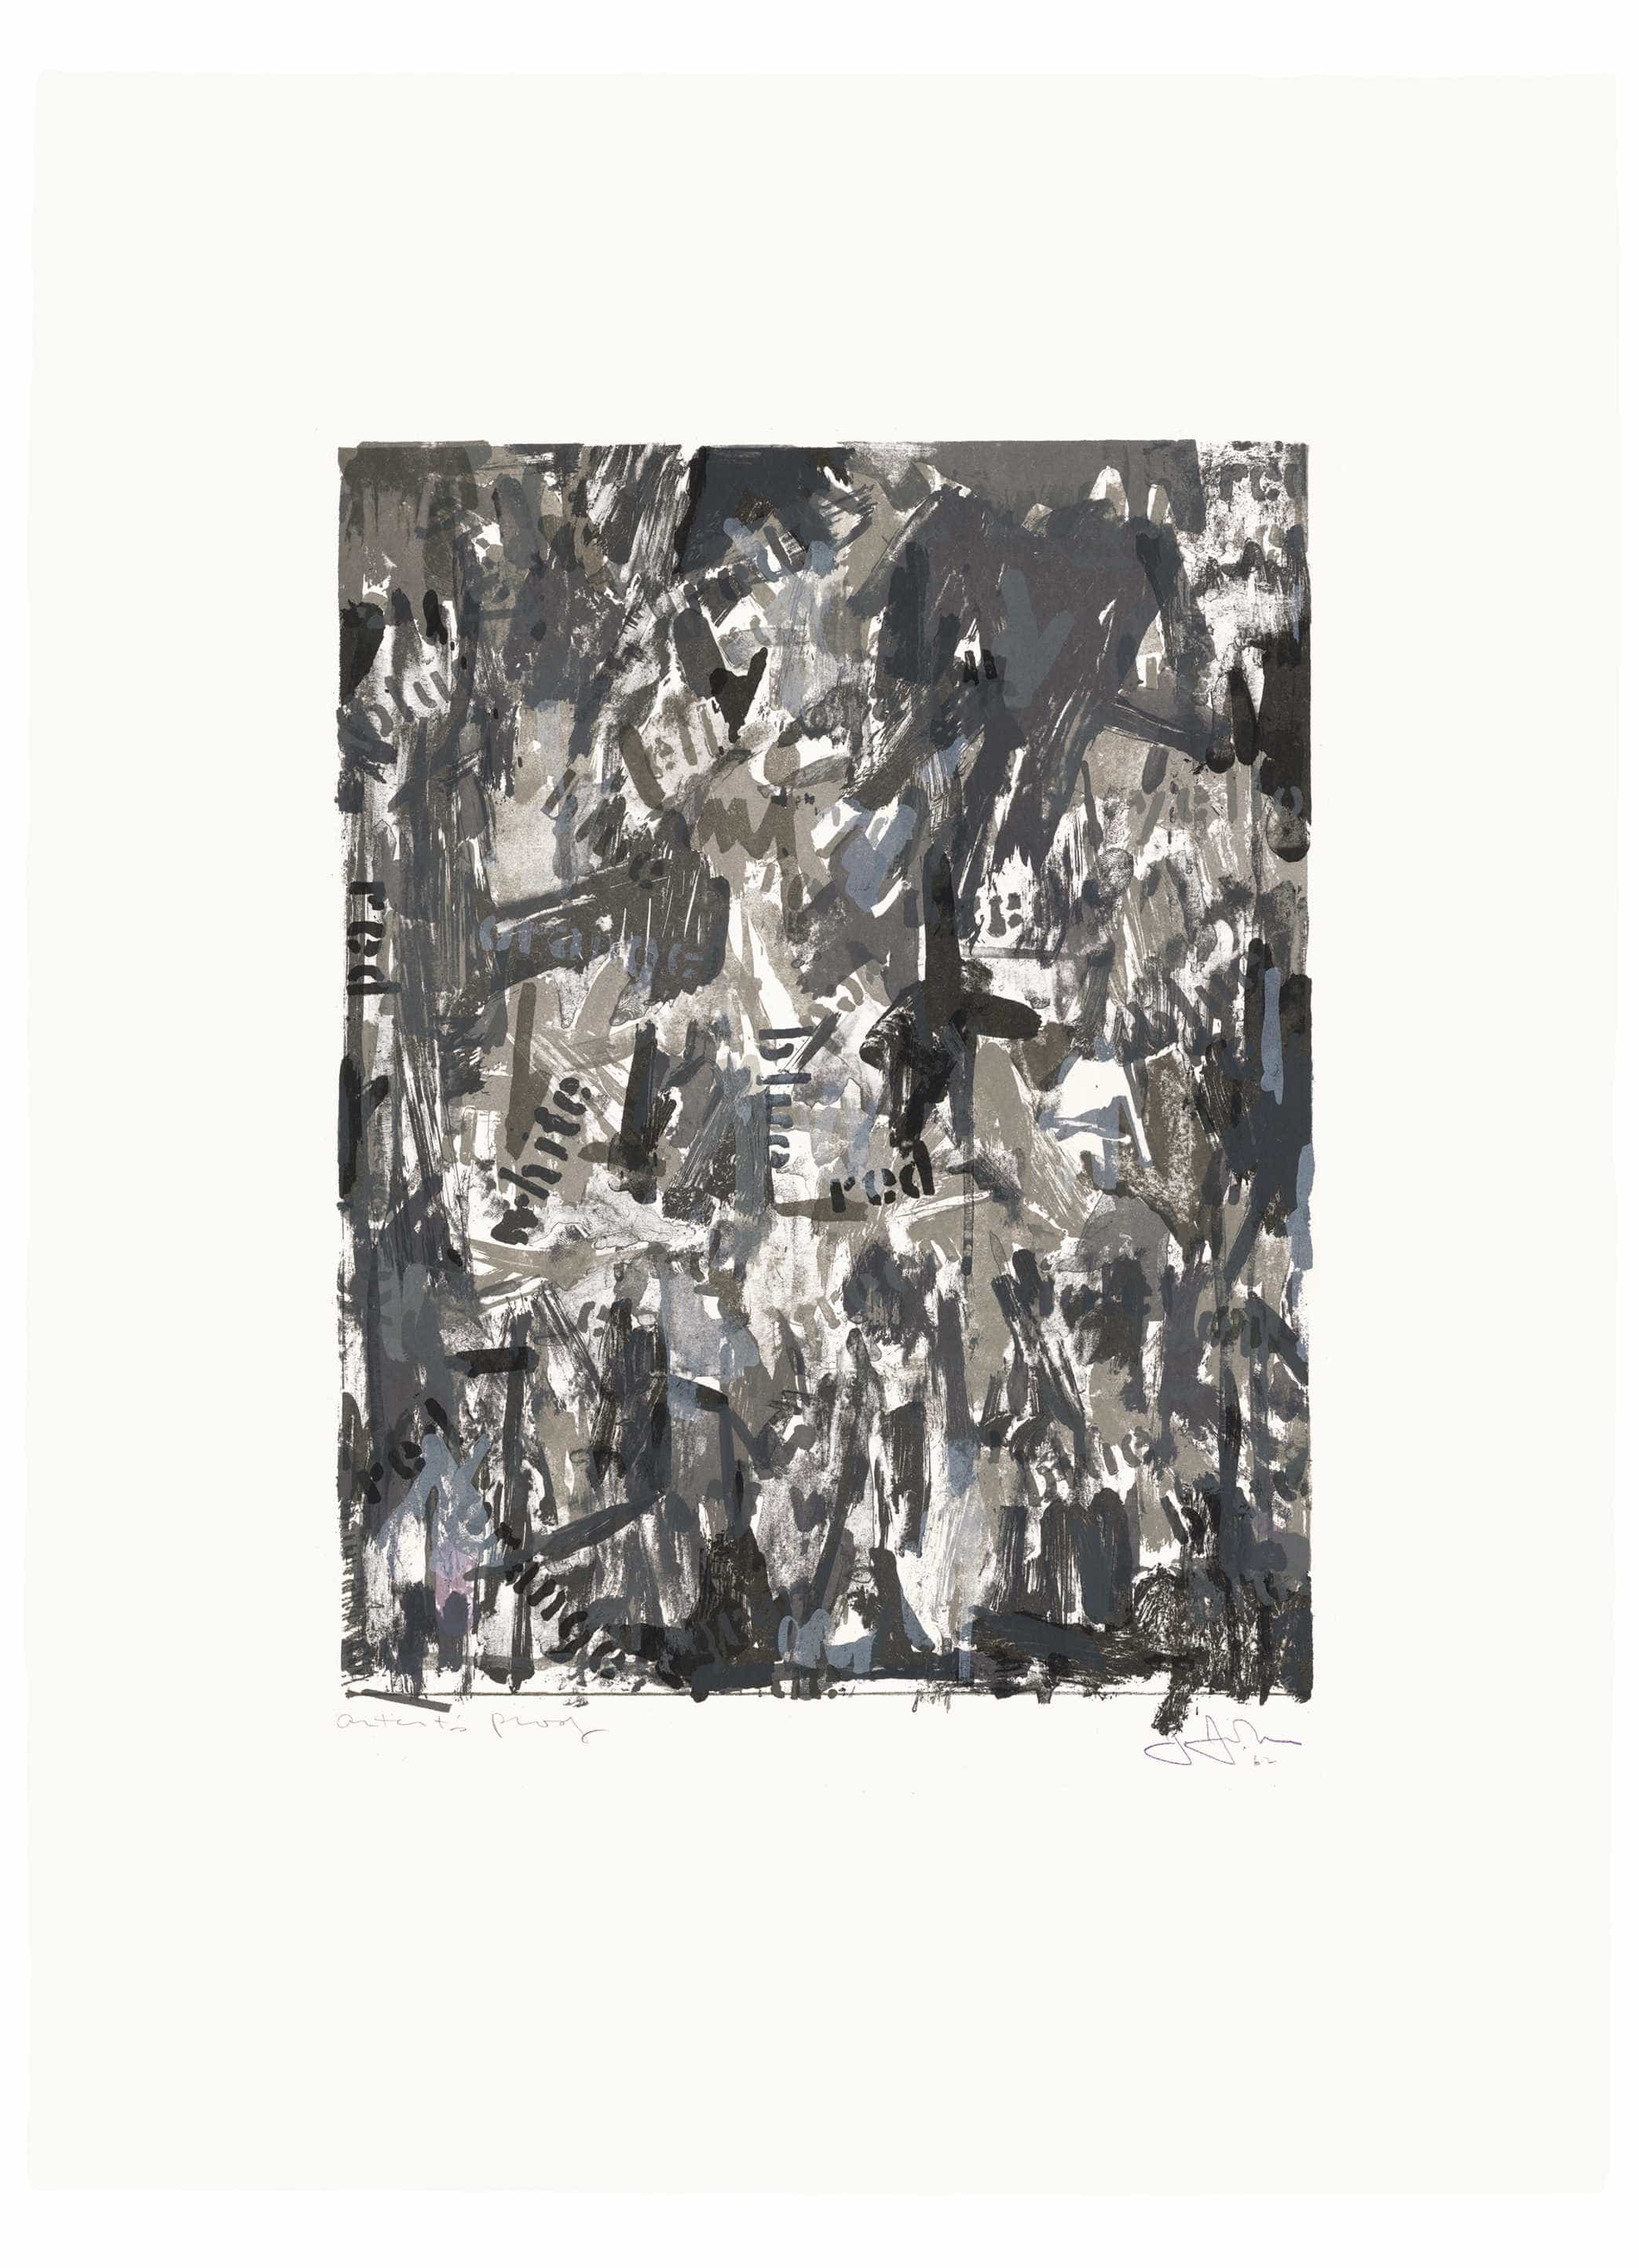 Jasper Johns, False Start II, 1962